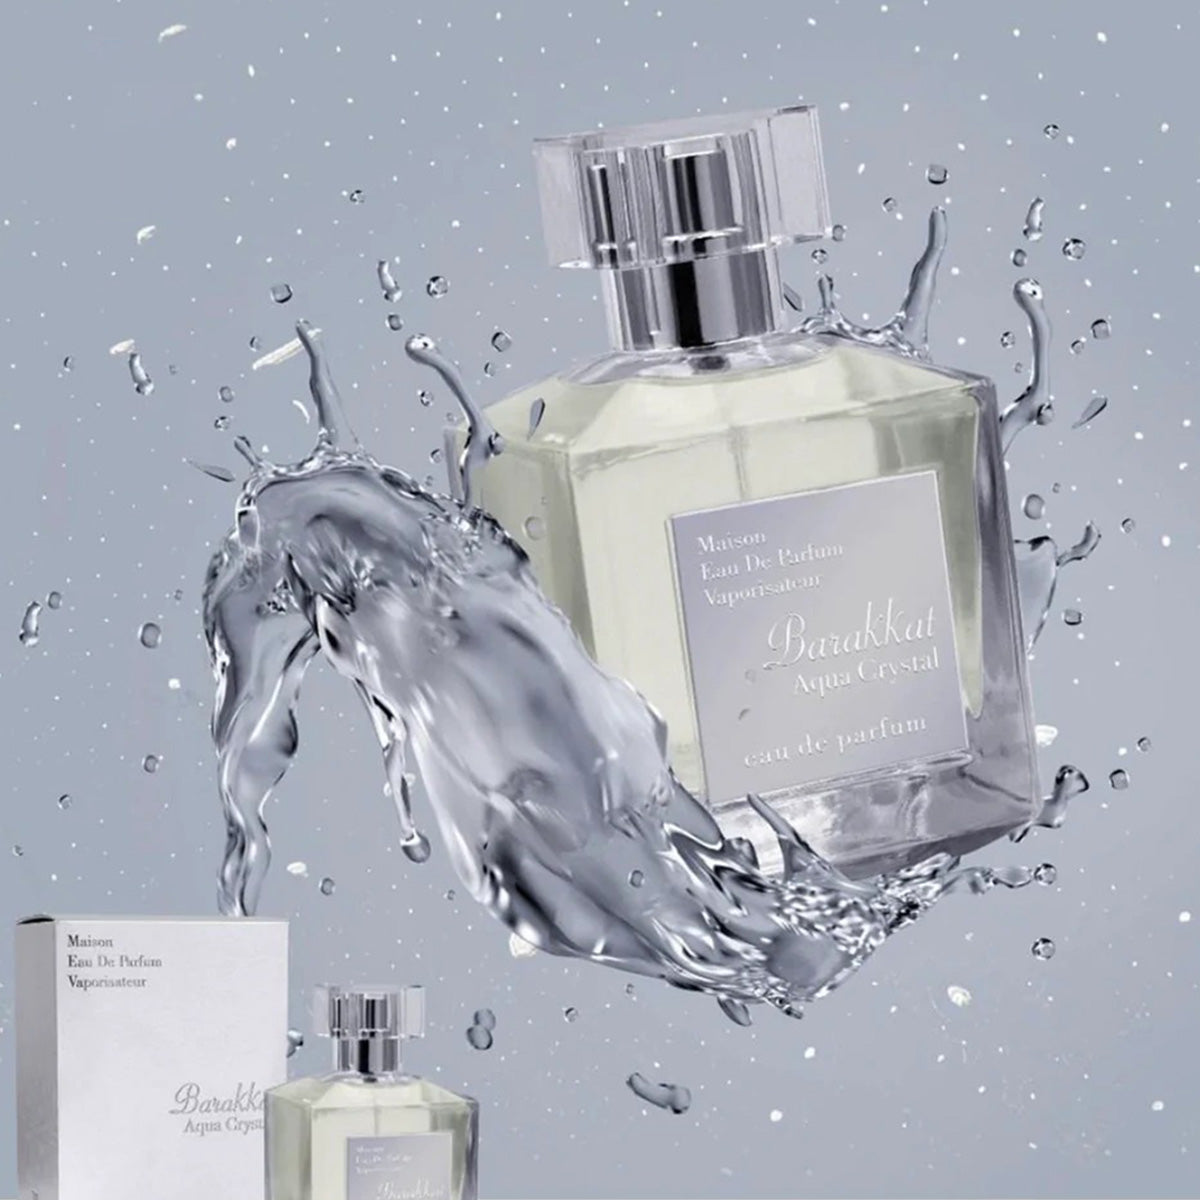 Barakkat Aqua Crystal Maison Eau de Parfum 100ml Fragrance World